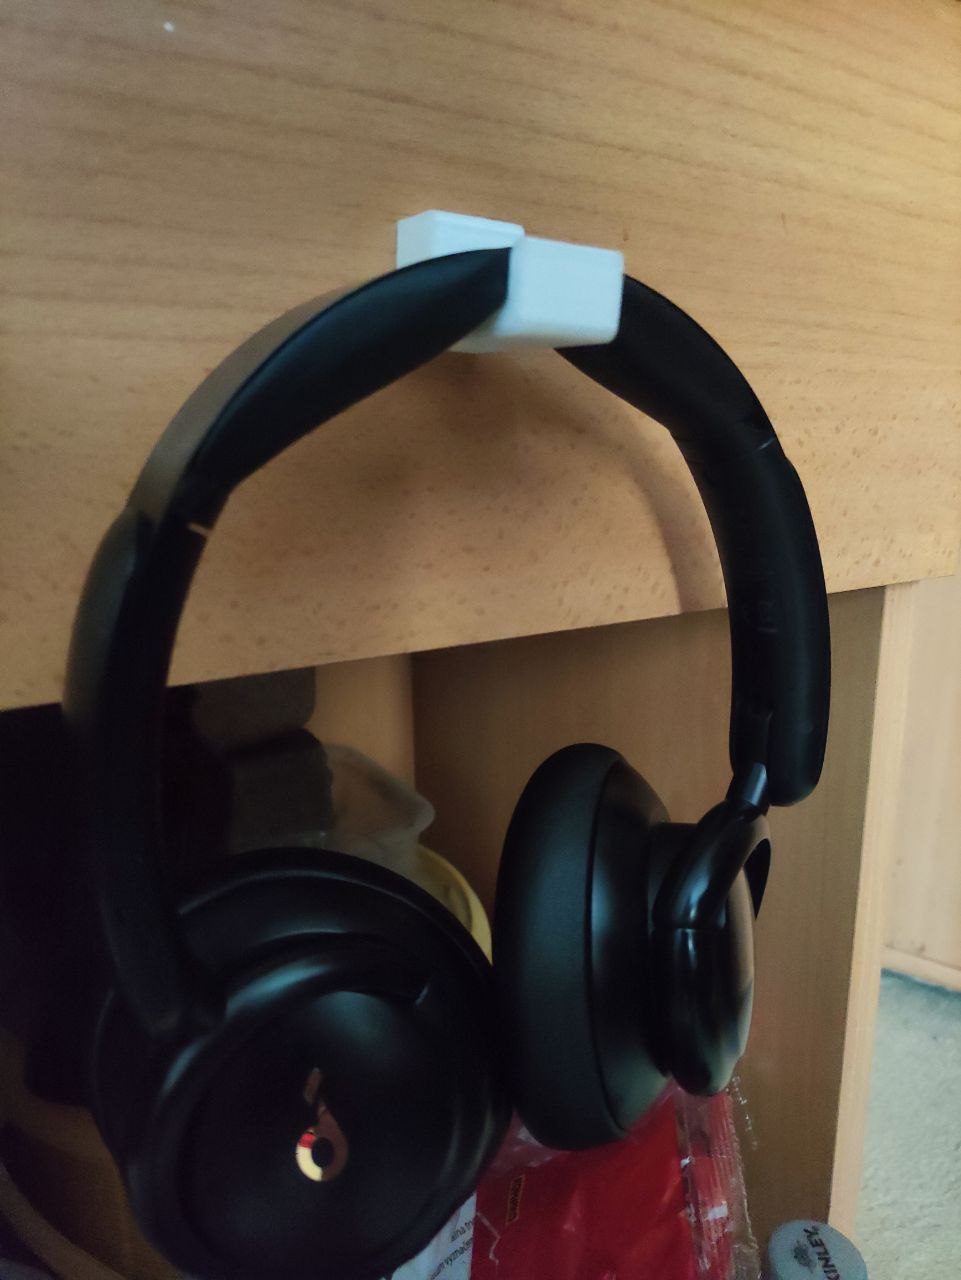 Cabinet Knobs Headphones holder